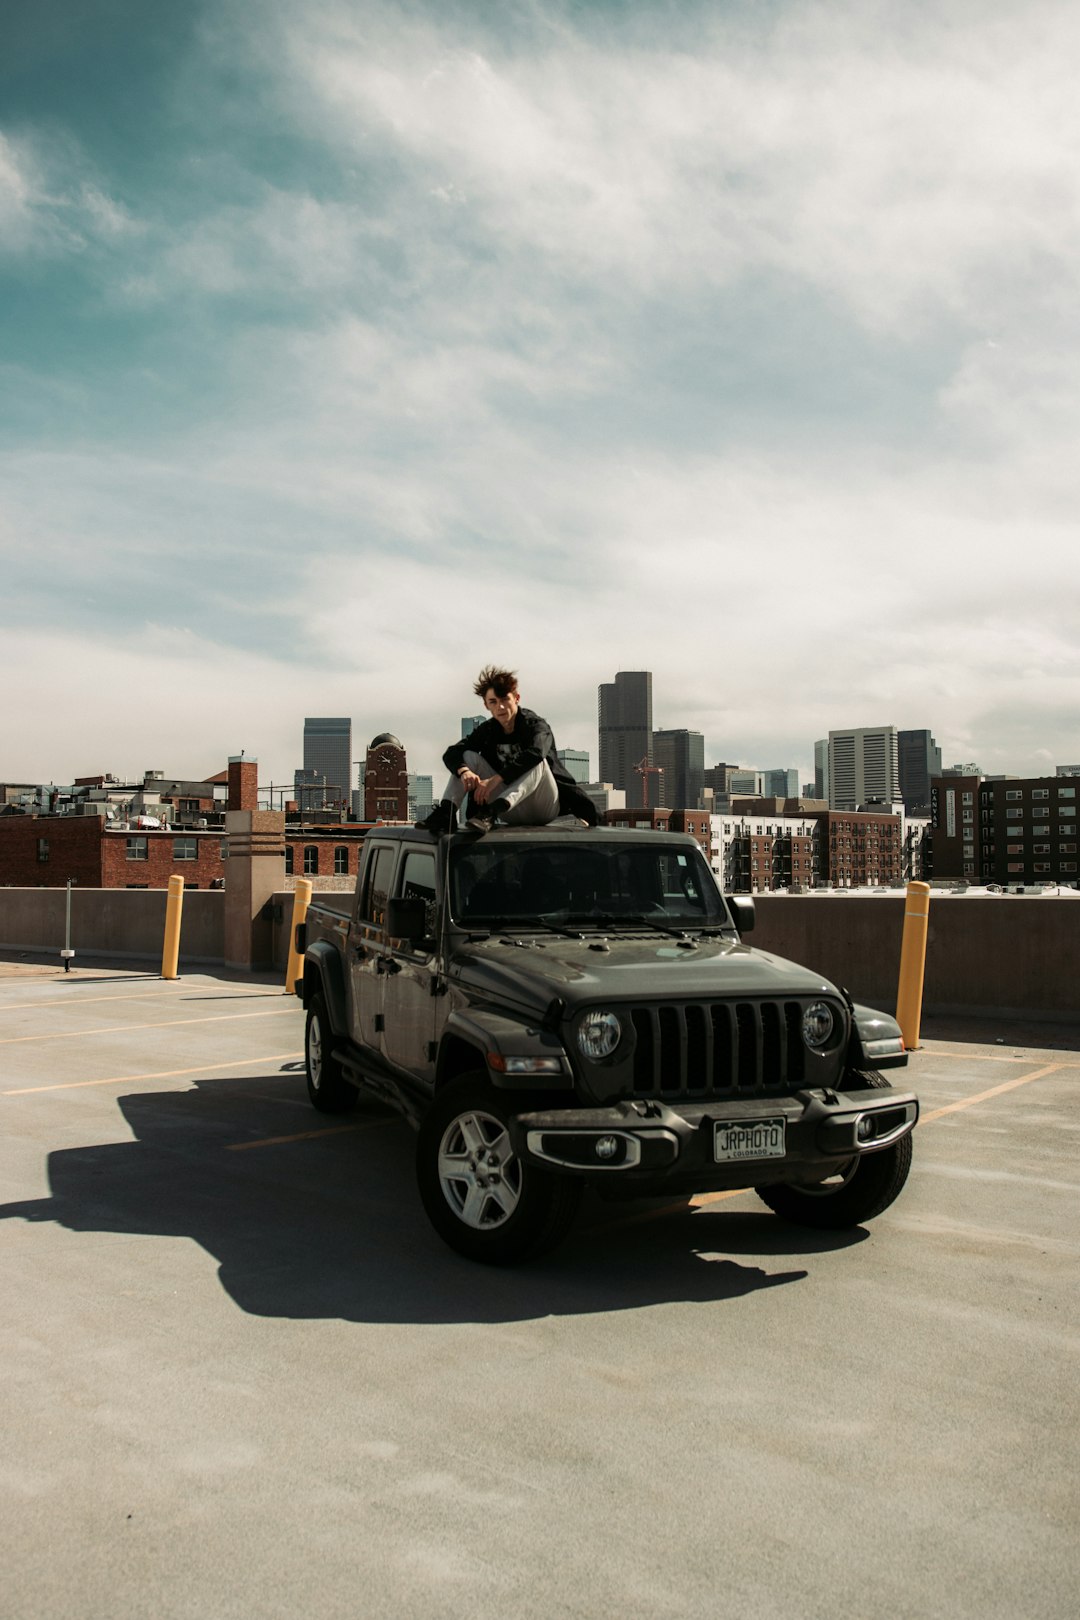 man in black jacket standing beside black jeep wrangler